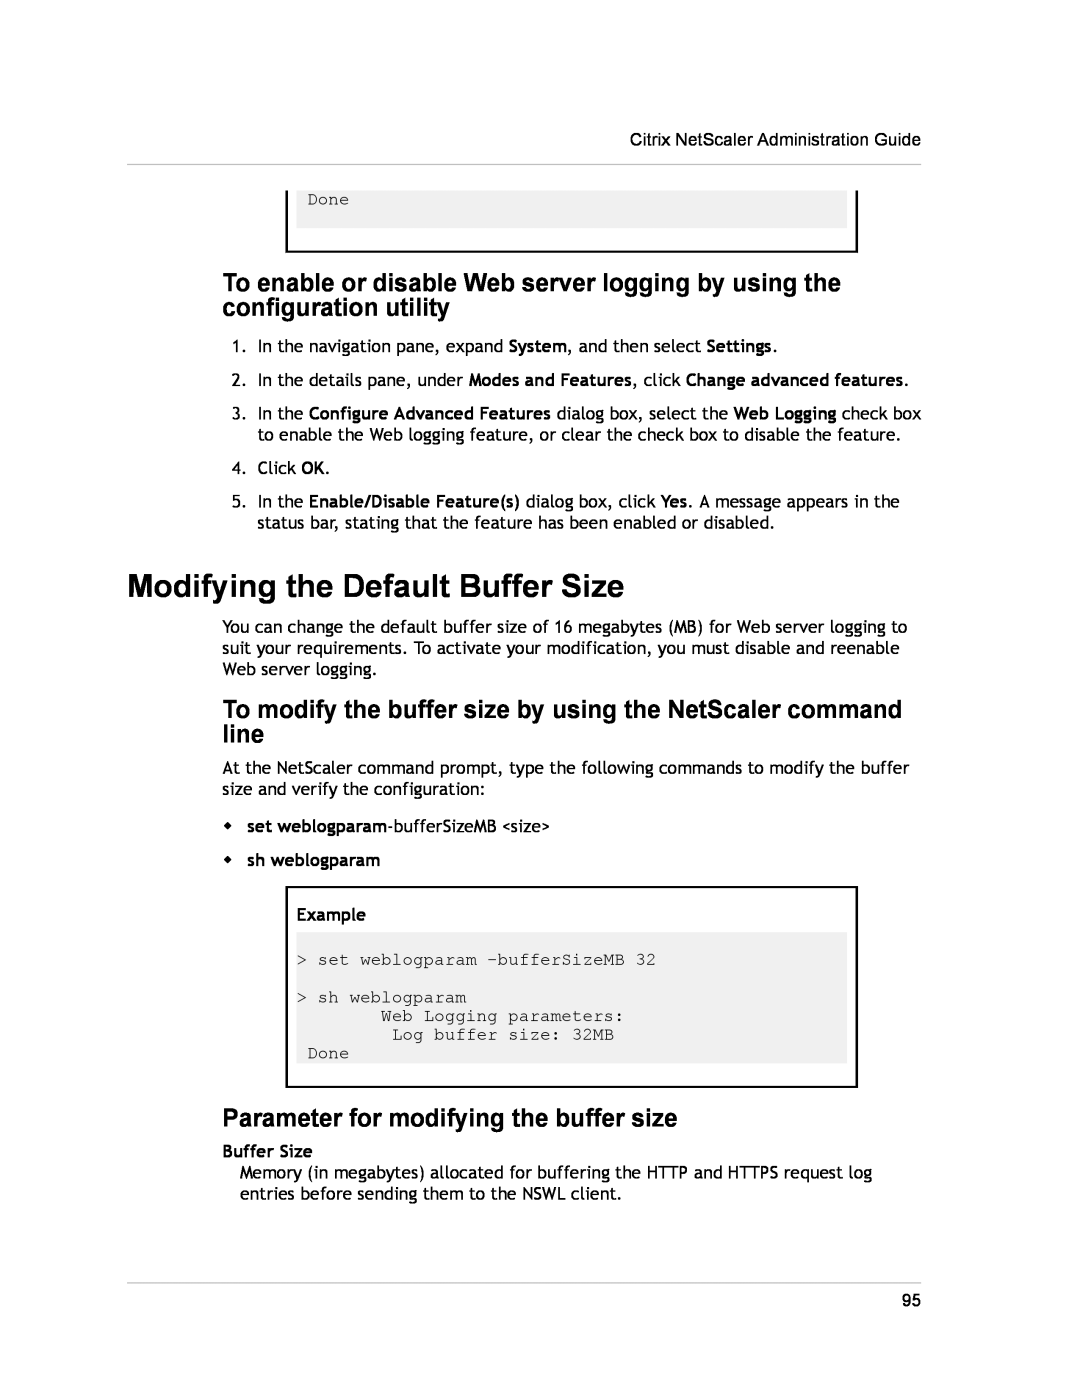 Citrix Systems CITRIX NETSCALER 9.3 manual Modifying the Default Buffer Size, Parameter for modifying the buffer size 